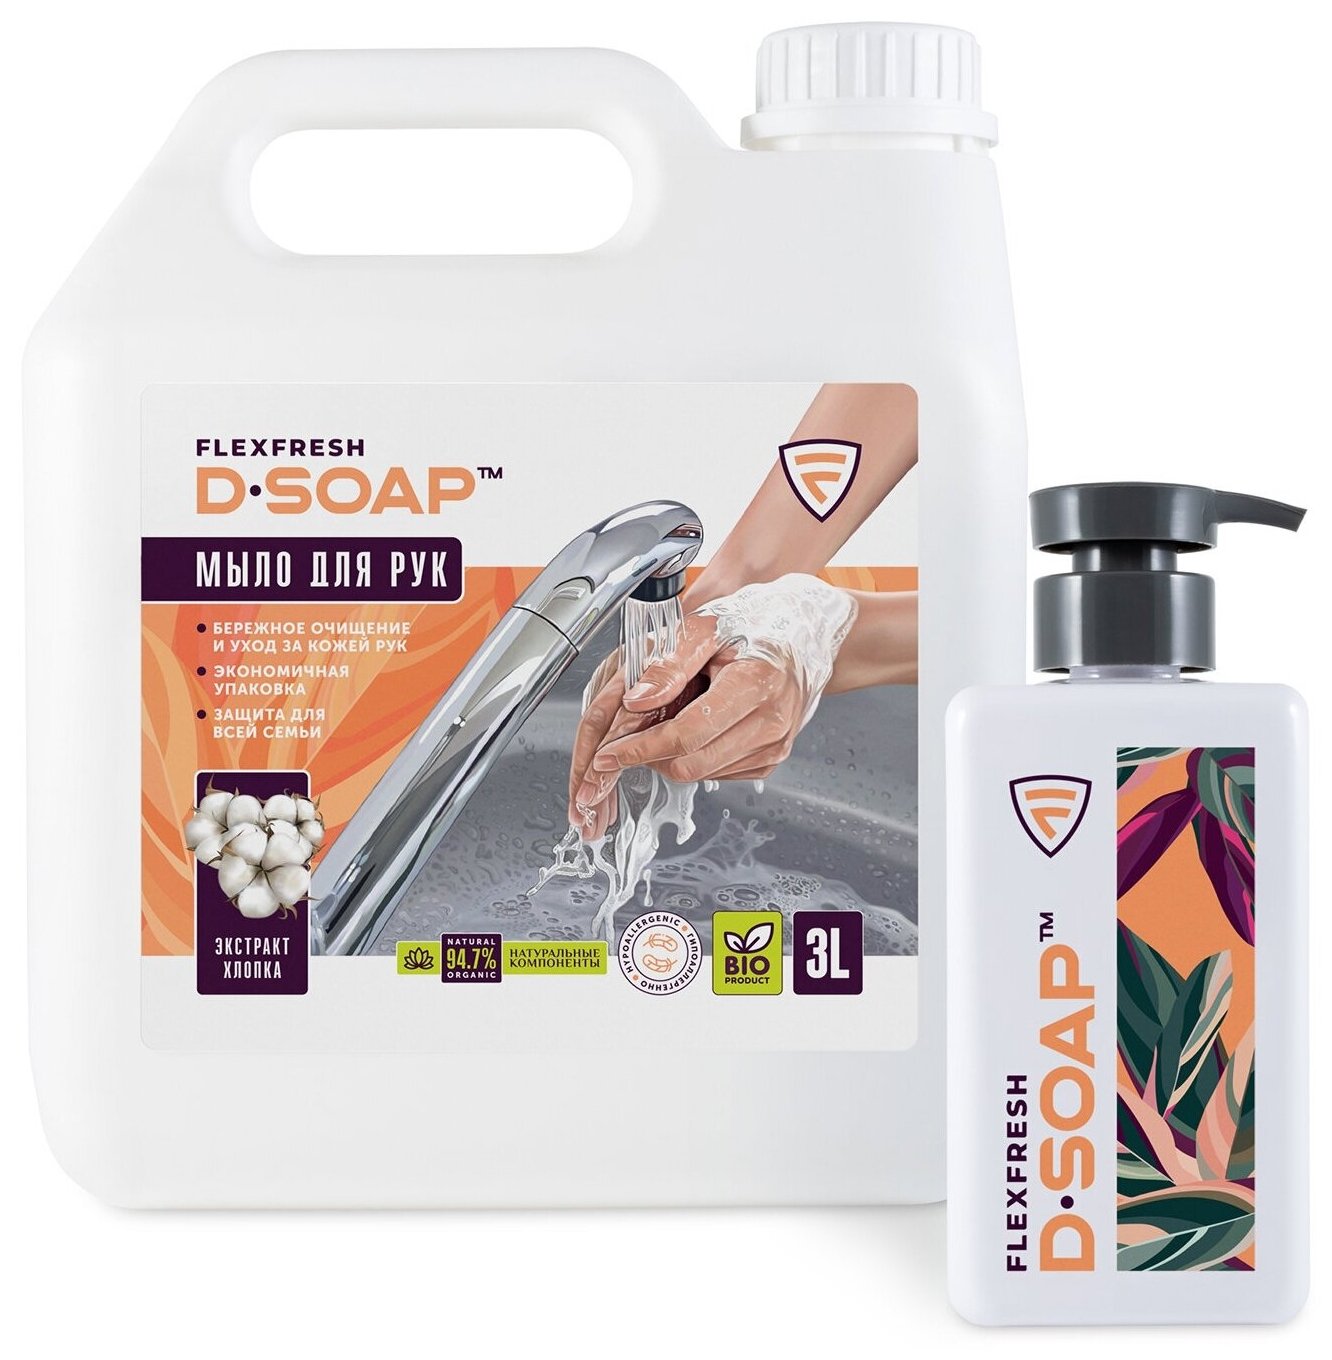 Flexfresh cleaning products / Жидкое мыло для рук Flexfresh "D-SOAP"  3 л в комплекте с флаконом аромат хлопок